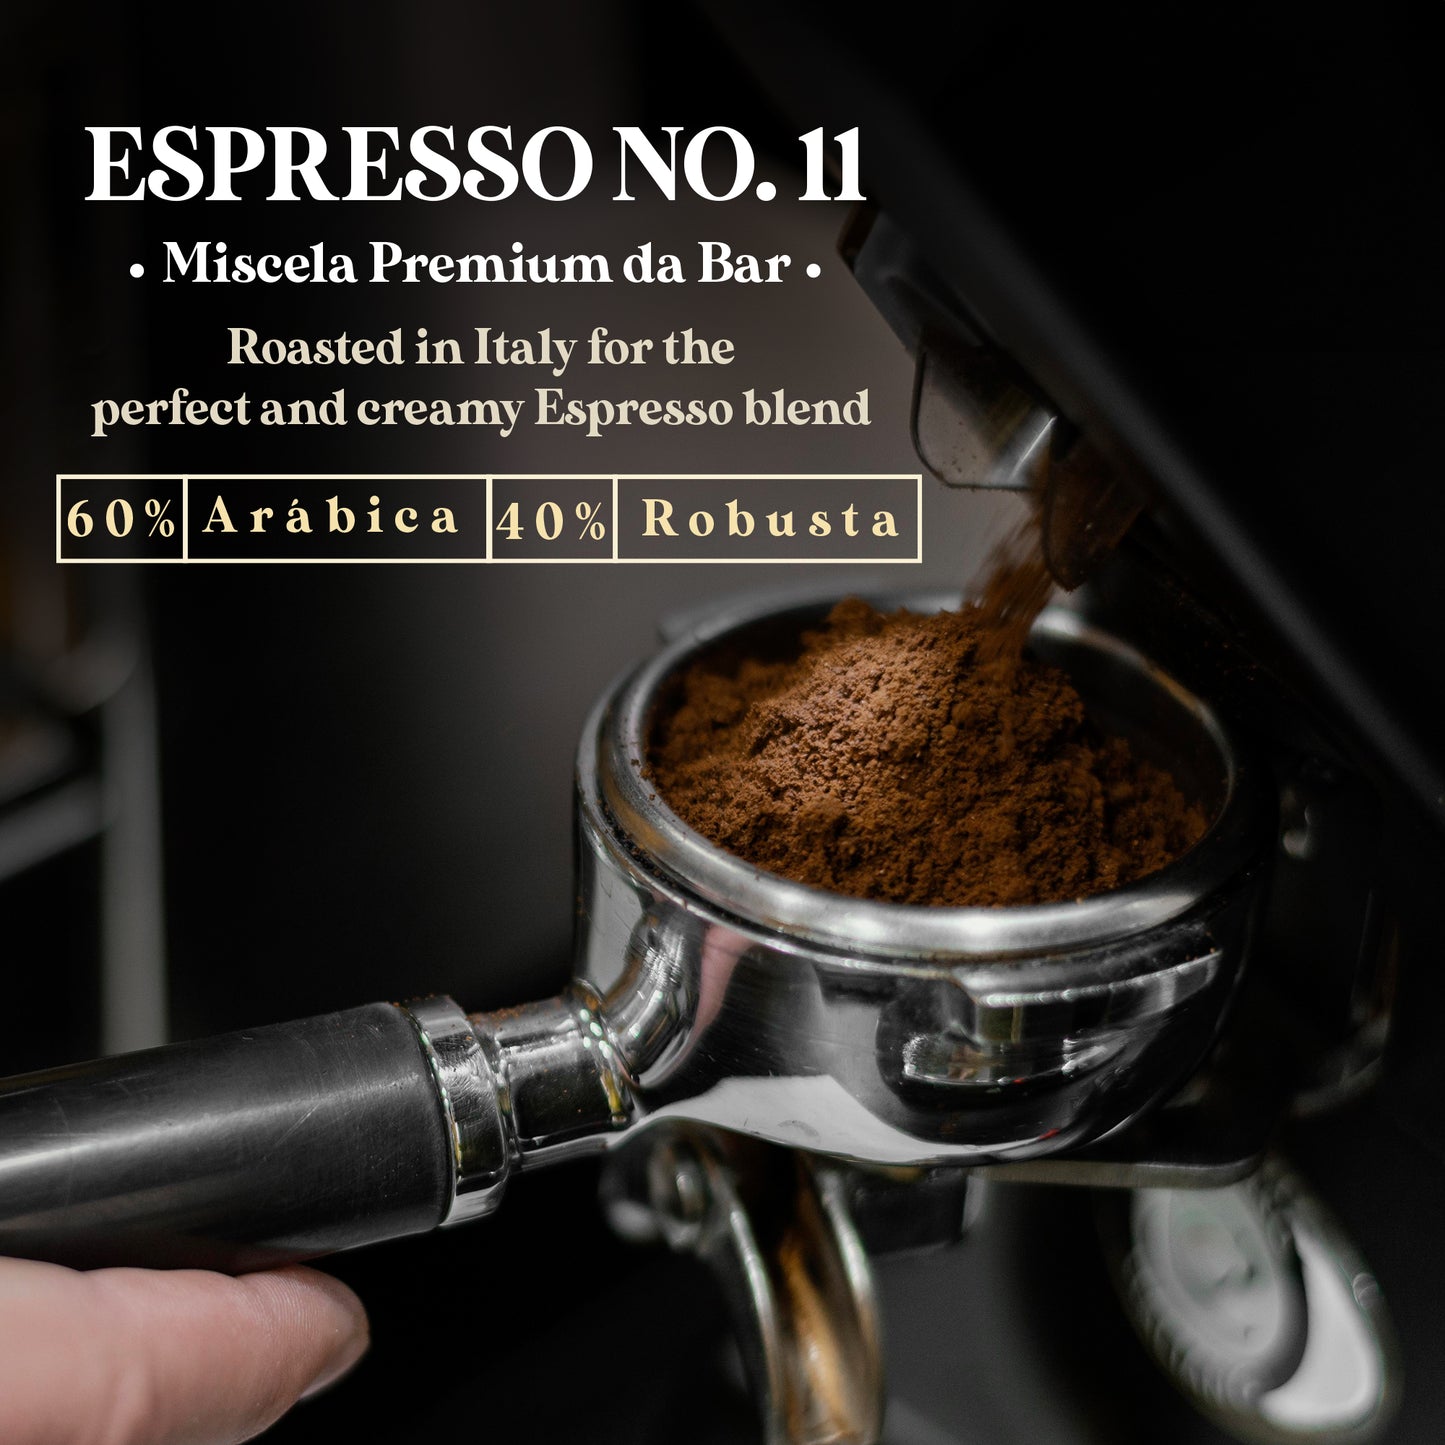 Espresso Italia Whole Bean Coffee - Espresso No.11 - Miscela Premium da Bar - Product of Italy. 1 kilo bag with valve